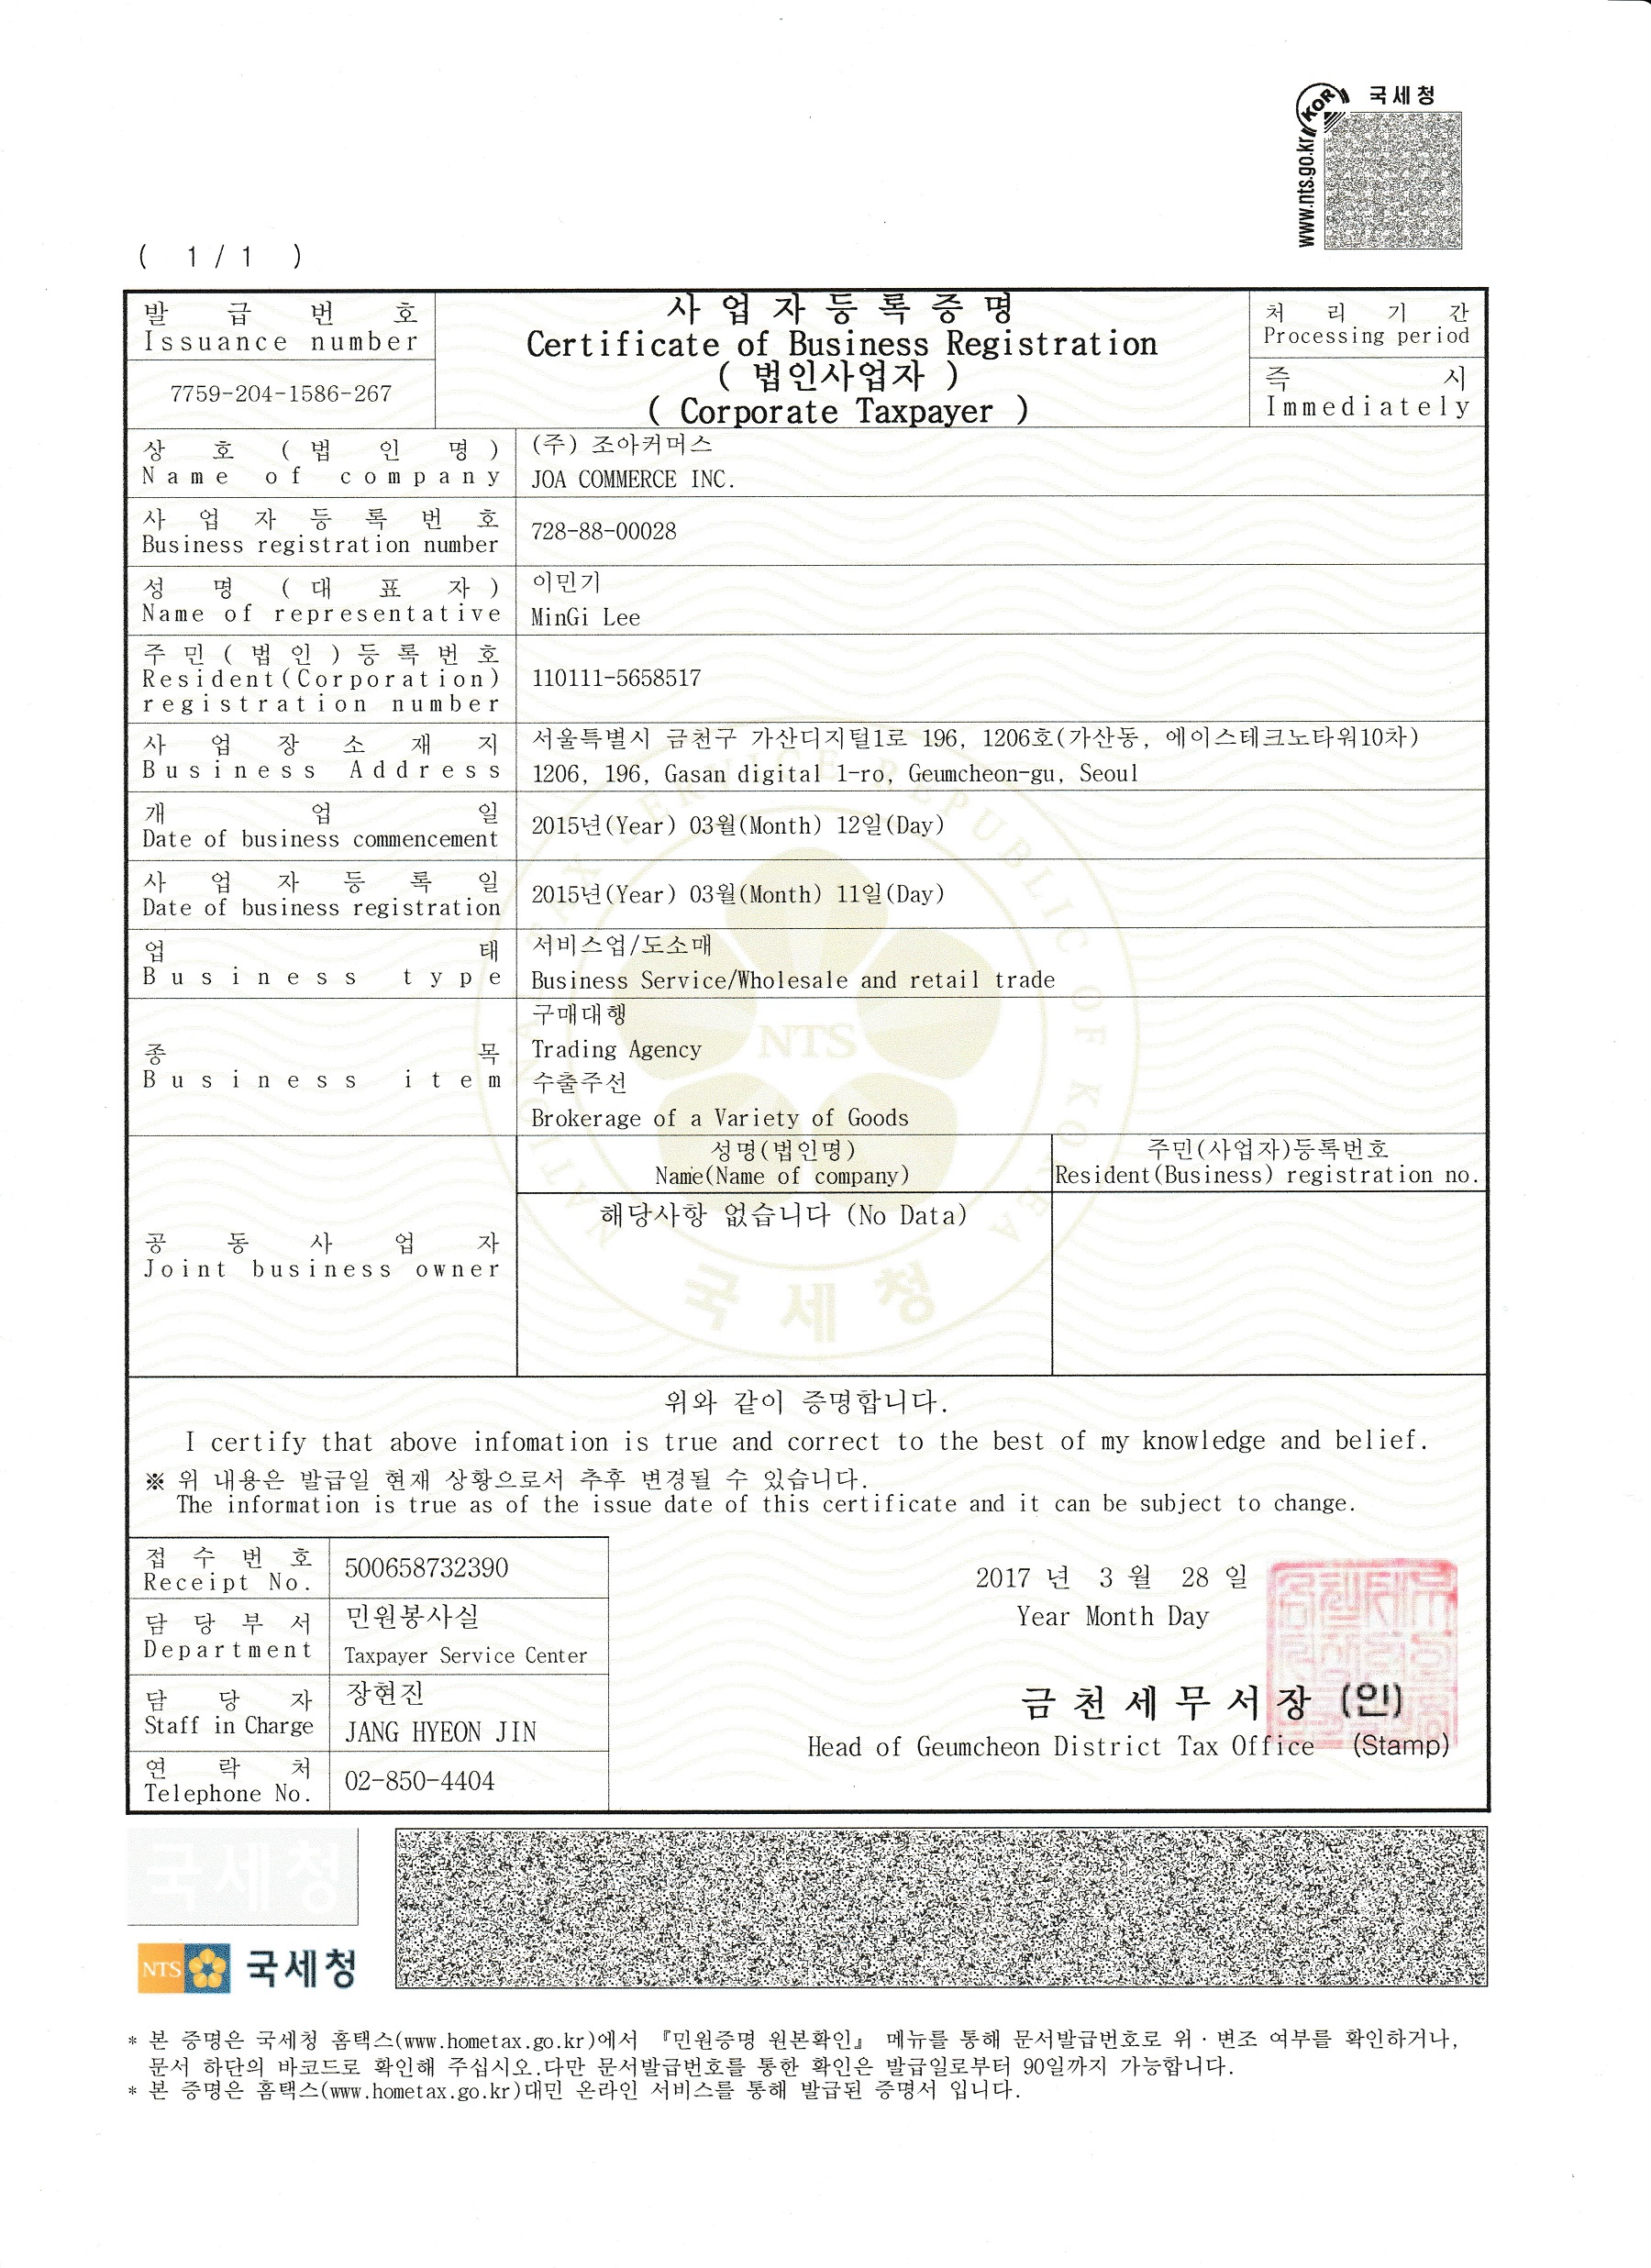 170328_certificate_of_business_registration_joacommerceinc_1800